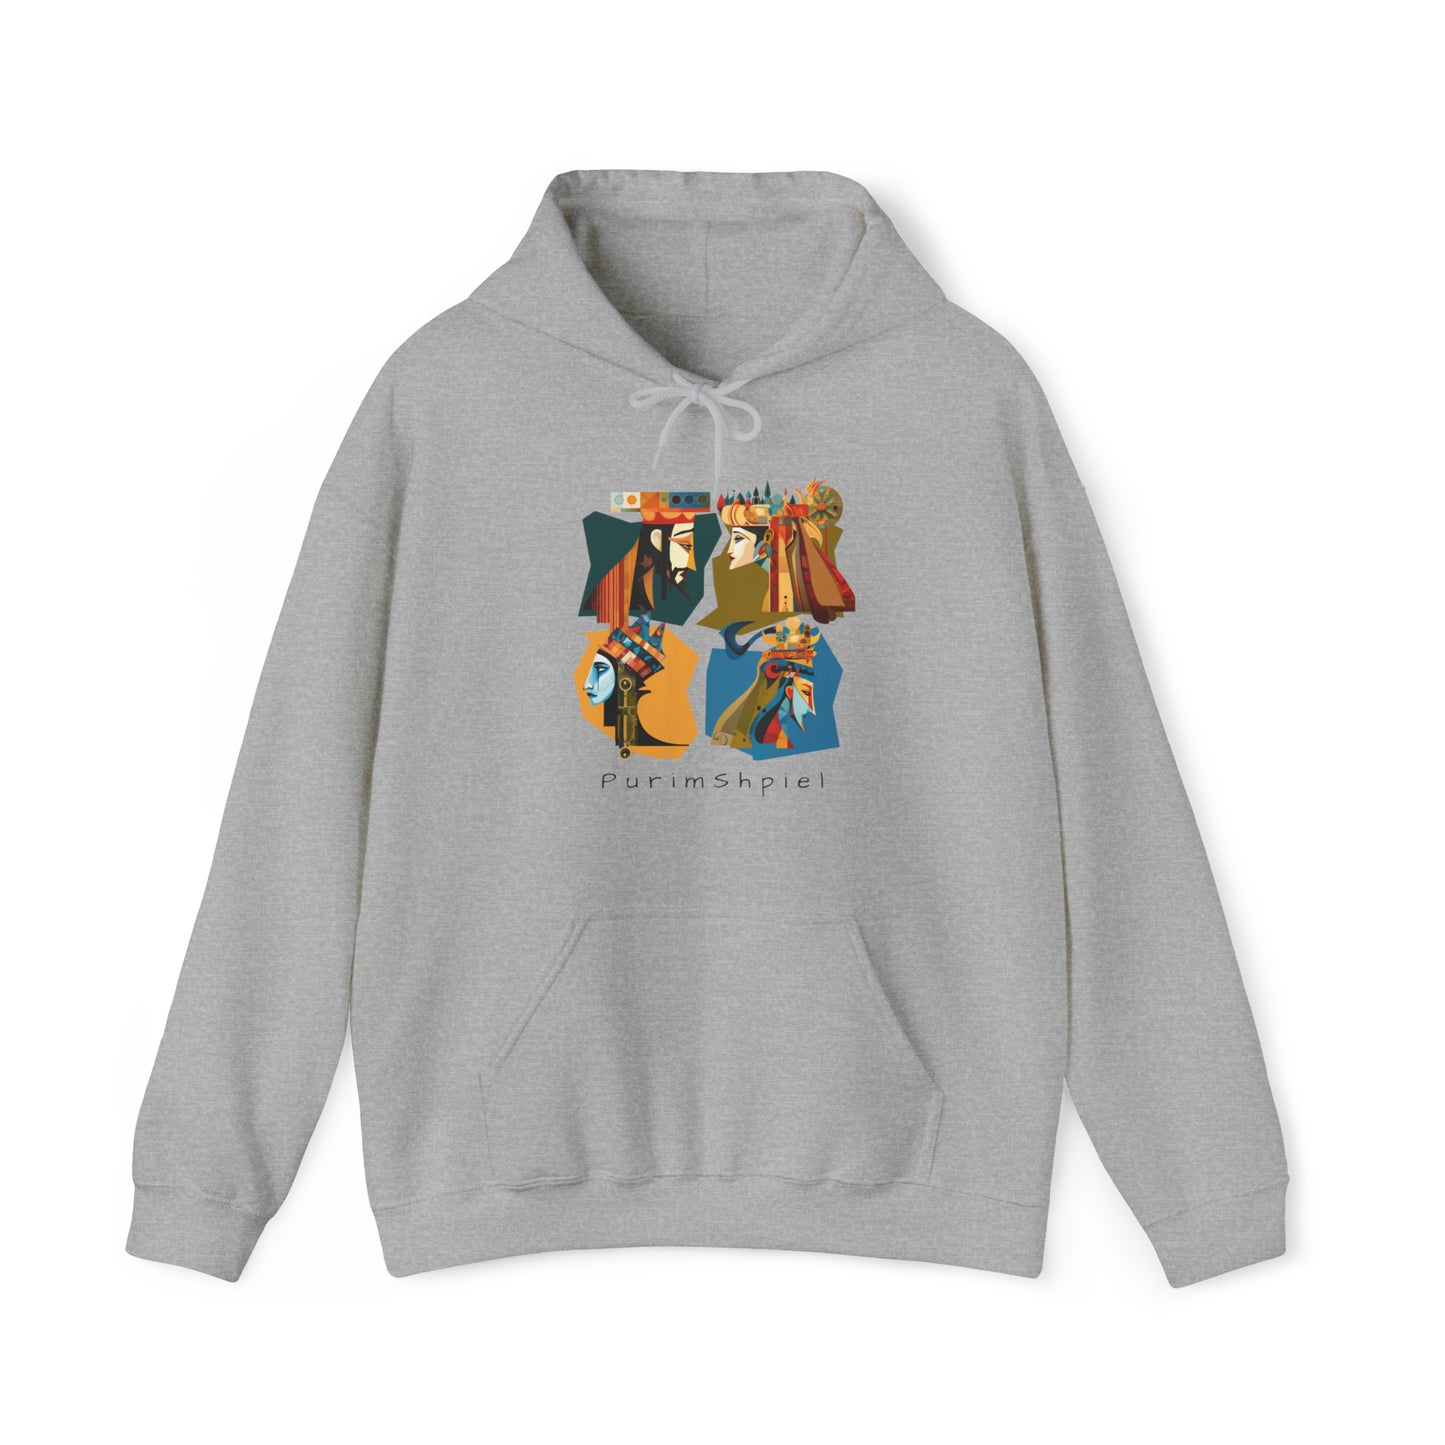 Purim Shpiel / Hooded Sweatshirt